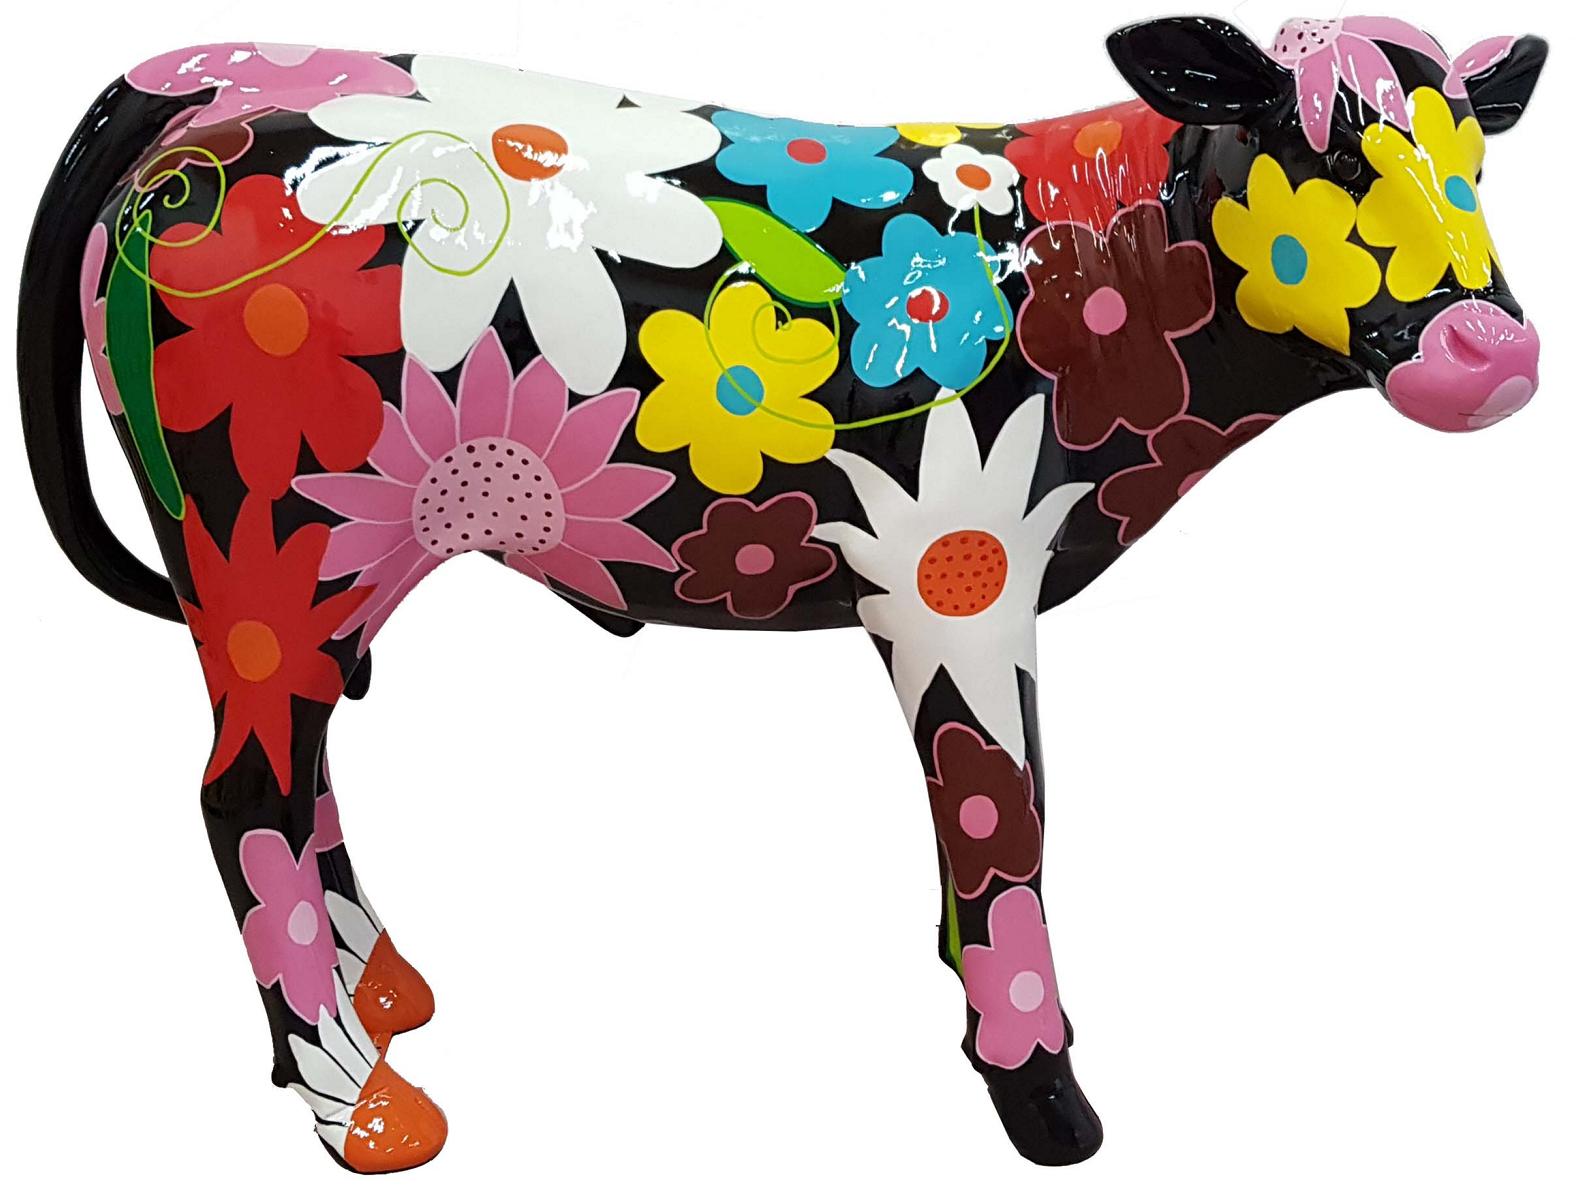 Designer Abstract Modern Figure Of A Cow Made of Plastic Decorative Garden Sculptures